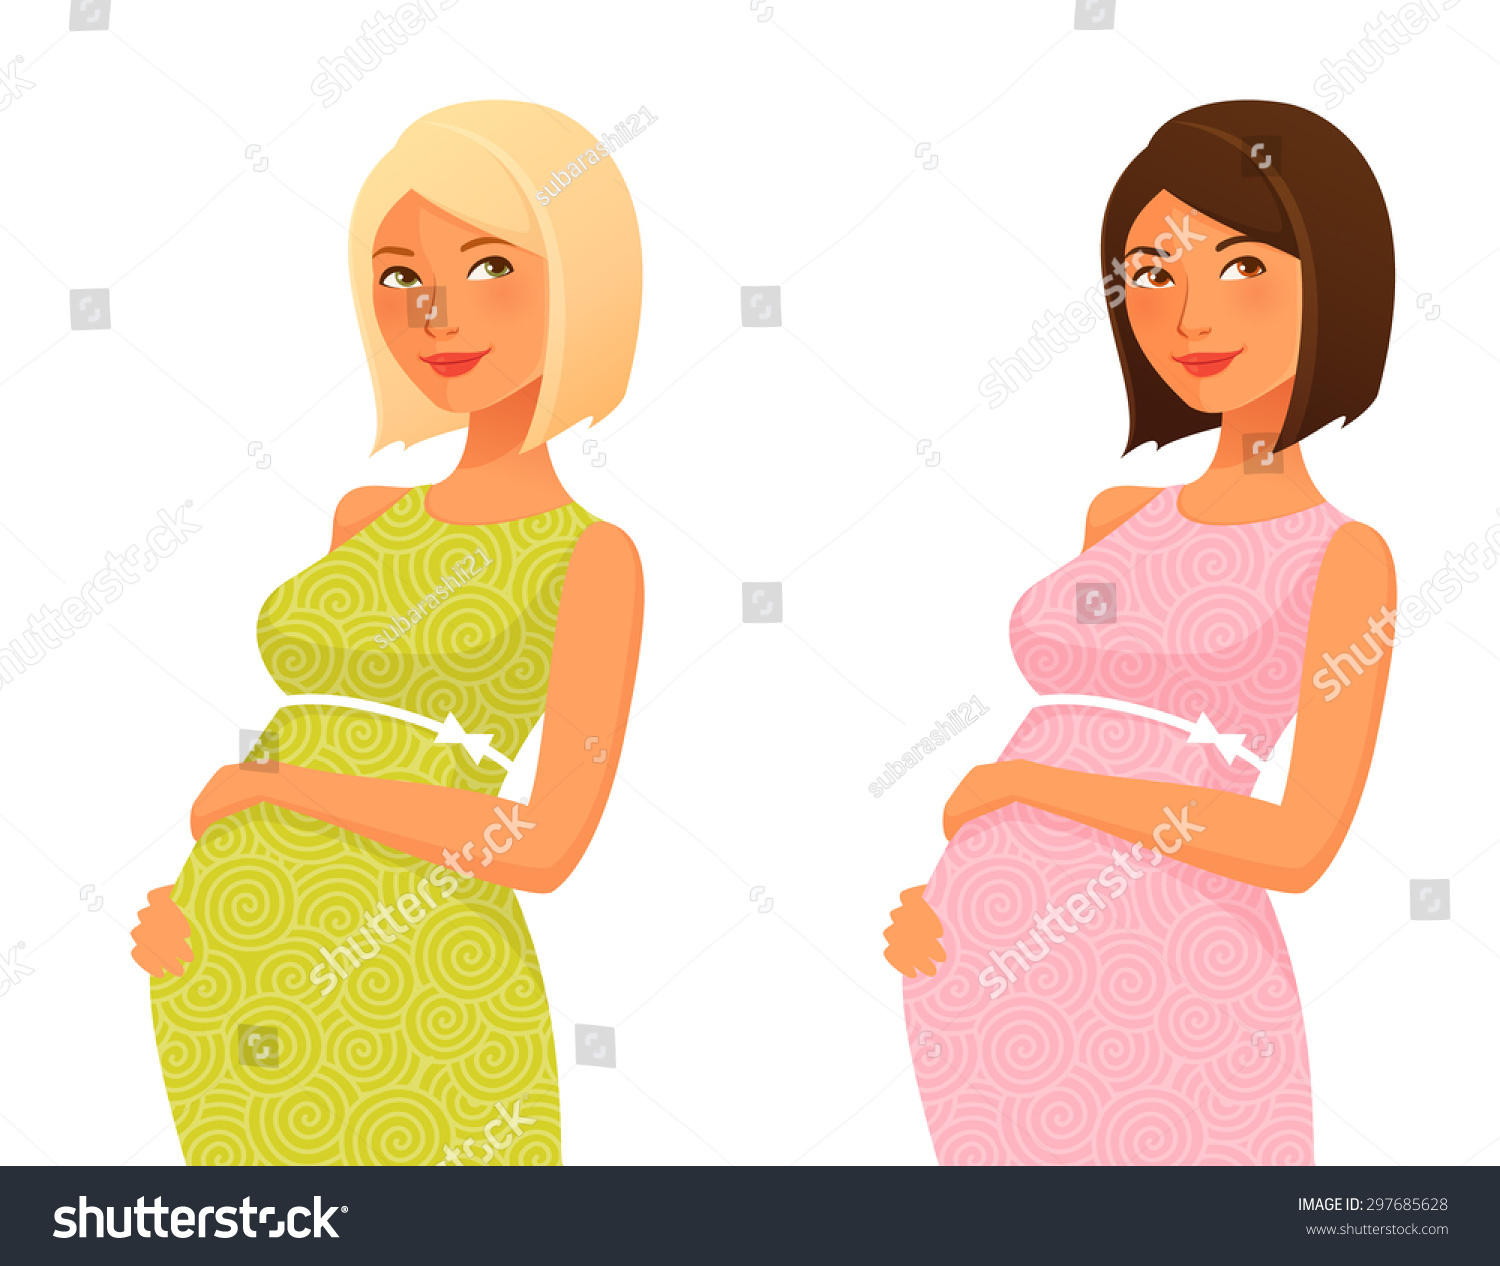 clip art expecting baby - photo #2